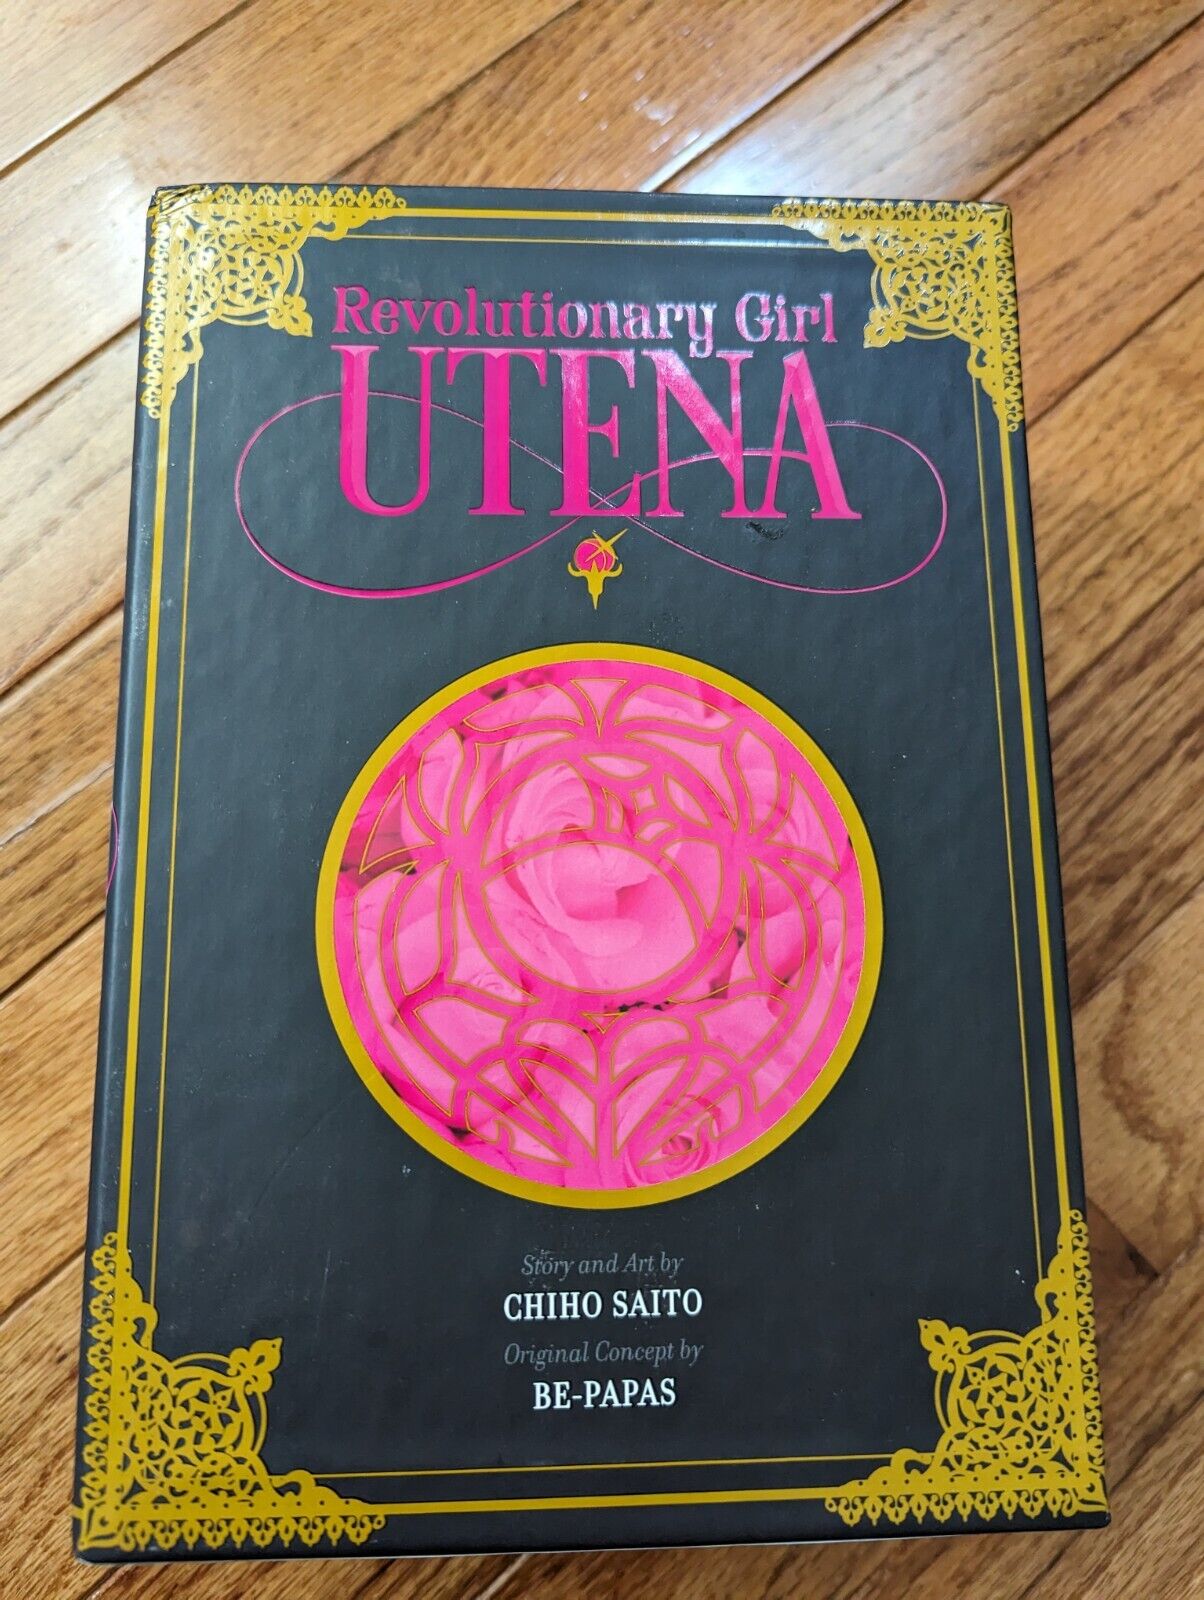 Revolutionary Girl Utena Complete Deluxe Hardcover Edition Manga Set English